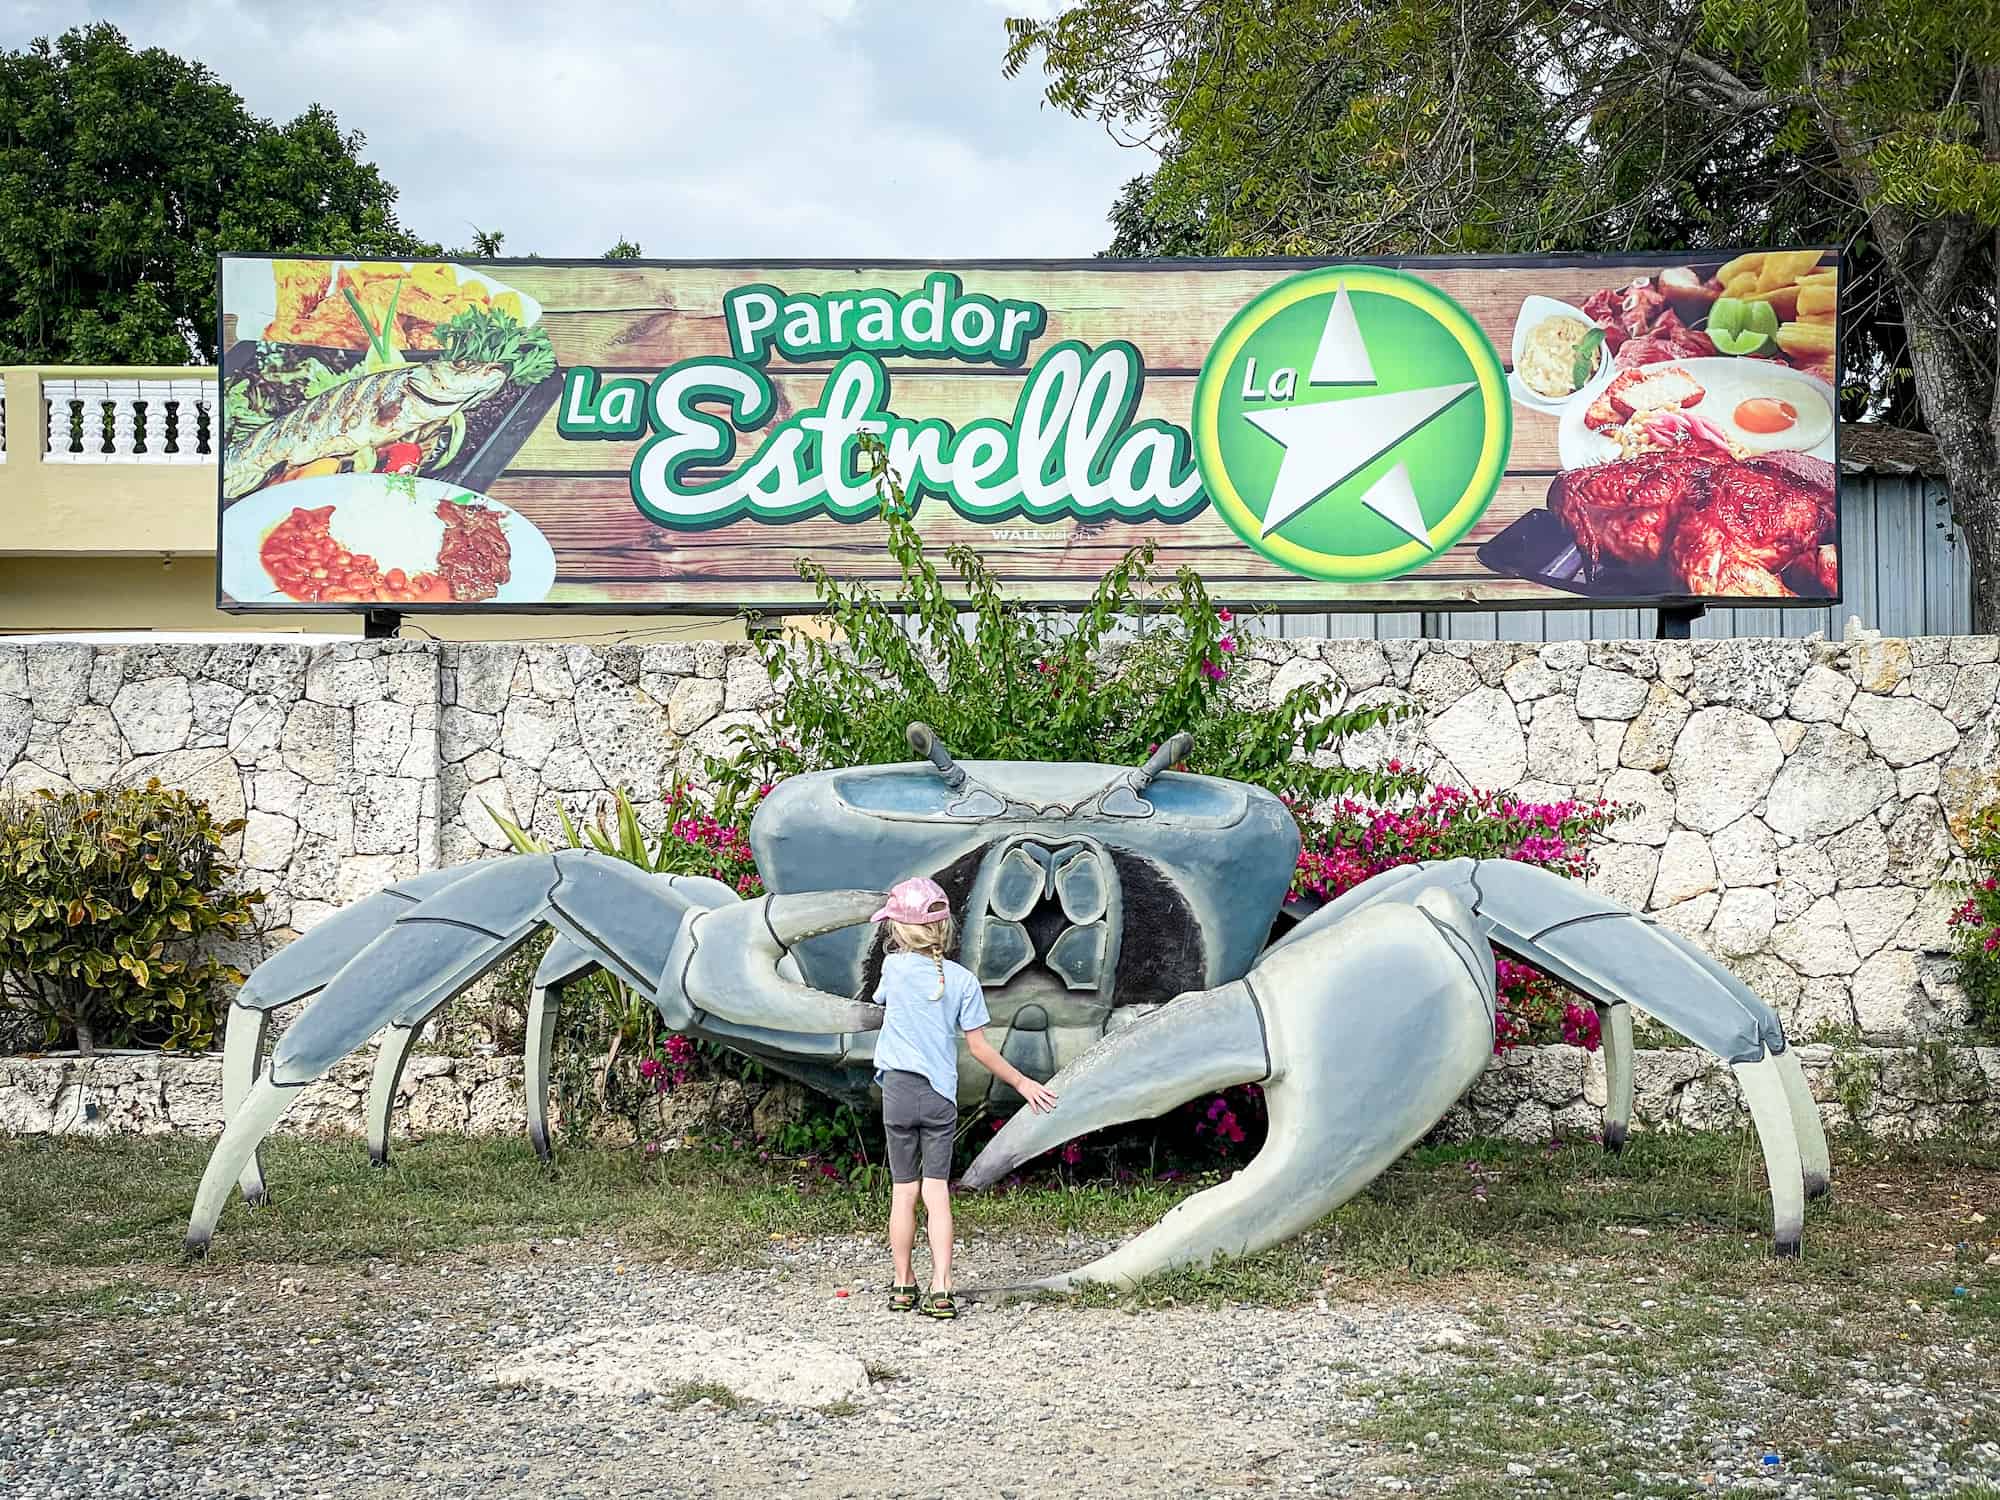 Dominican Republic - Parador Estrella child with giant crab